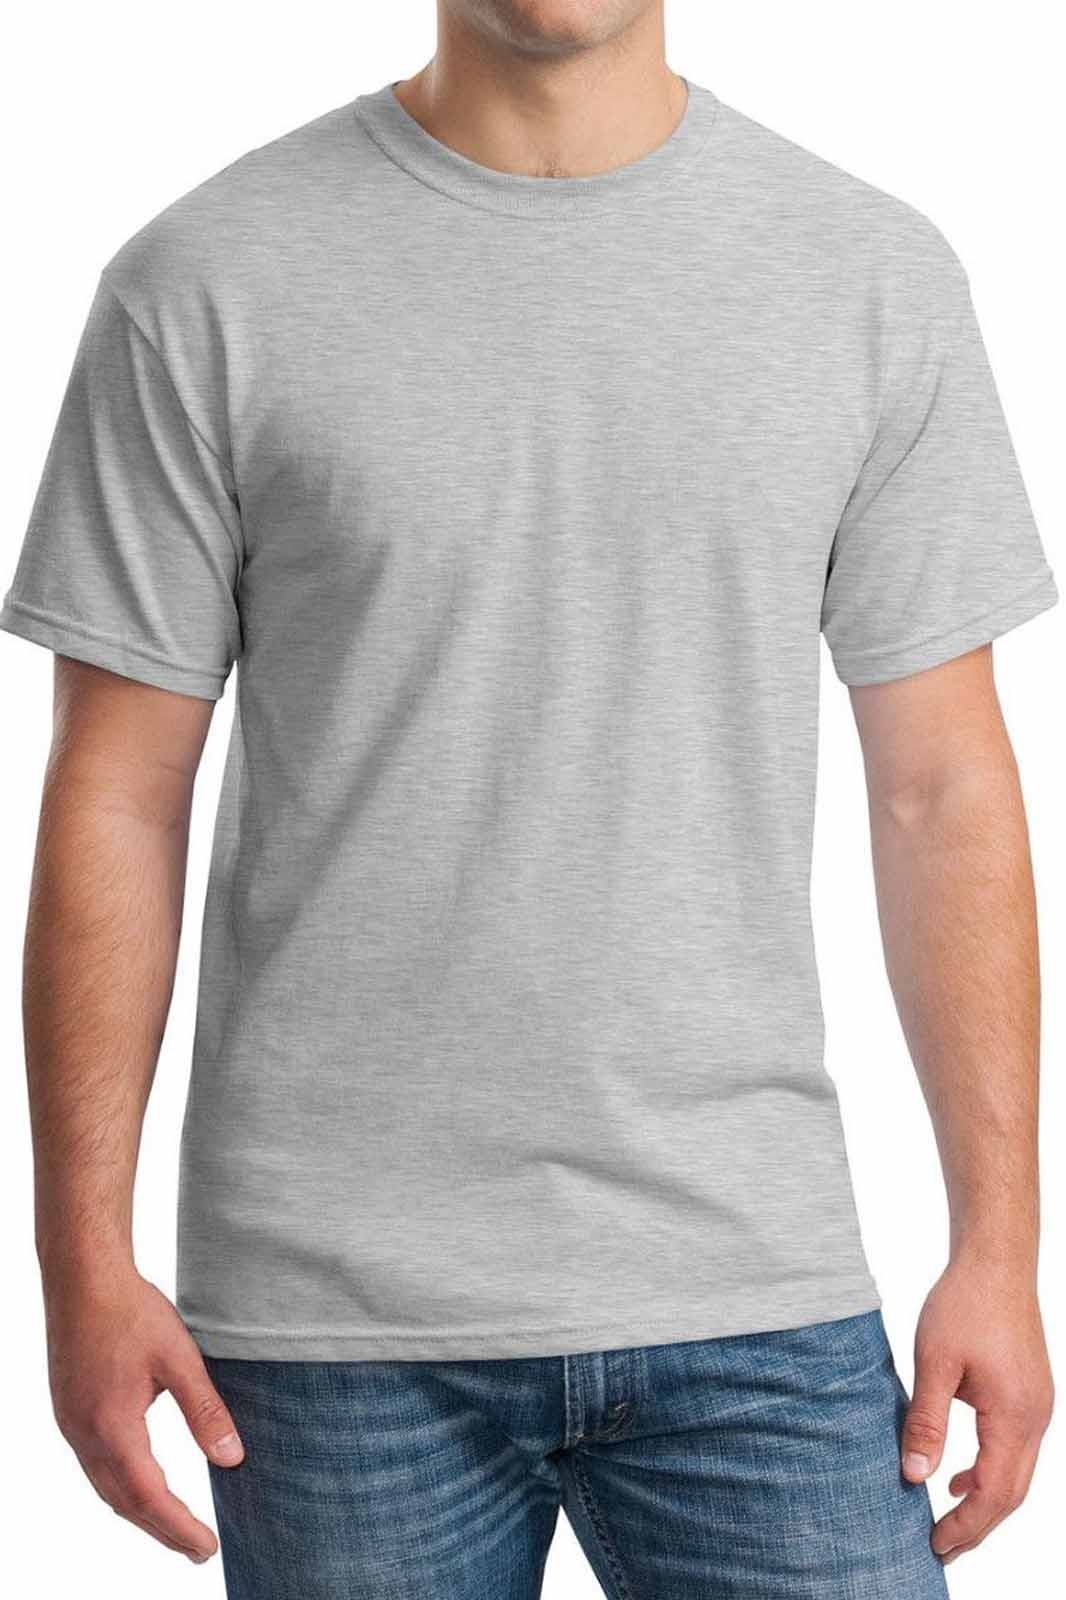 Футболка светло серая. Ash Grey Polo Tshirt. Футболка мужская. Серая футболка. Серая футболка мужская.